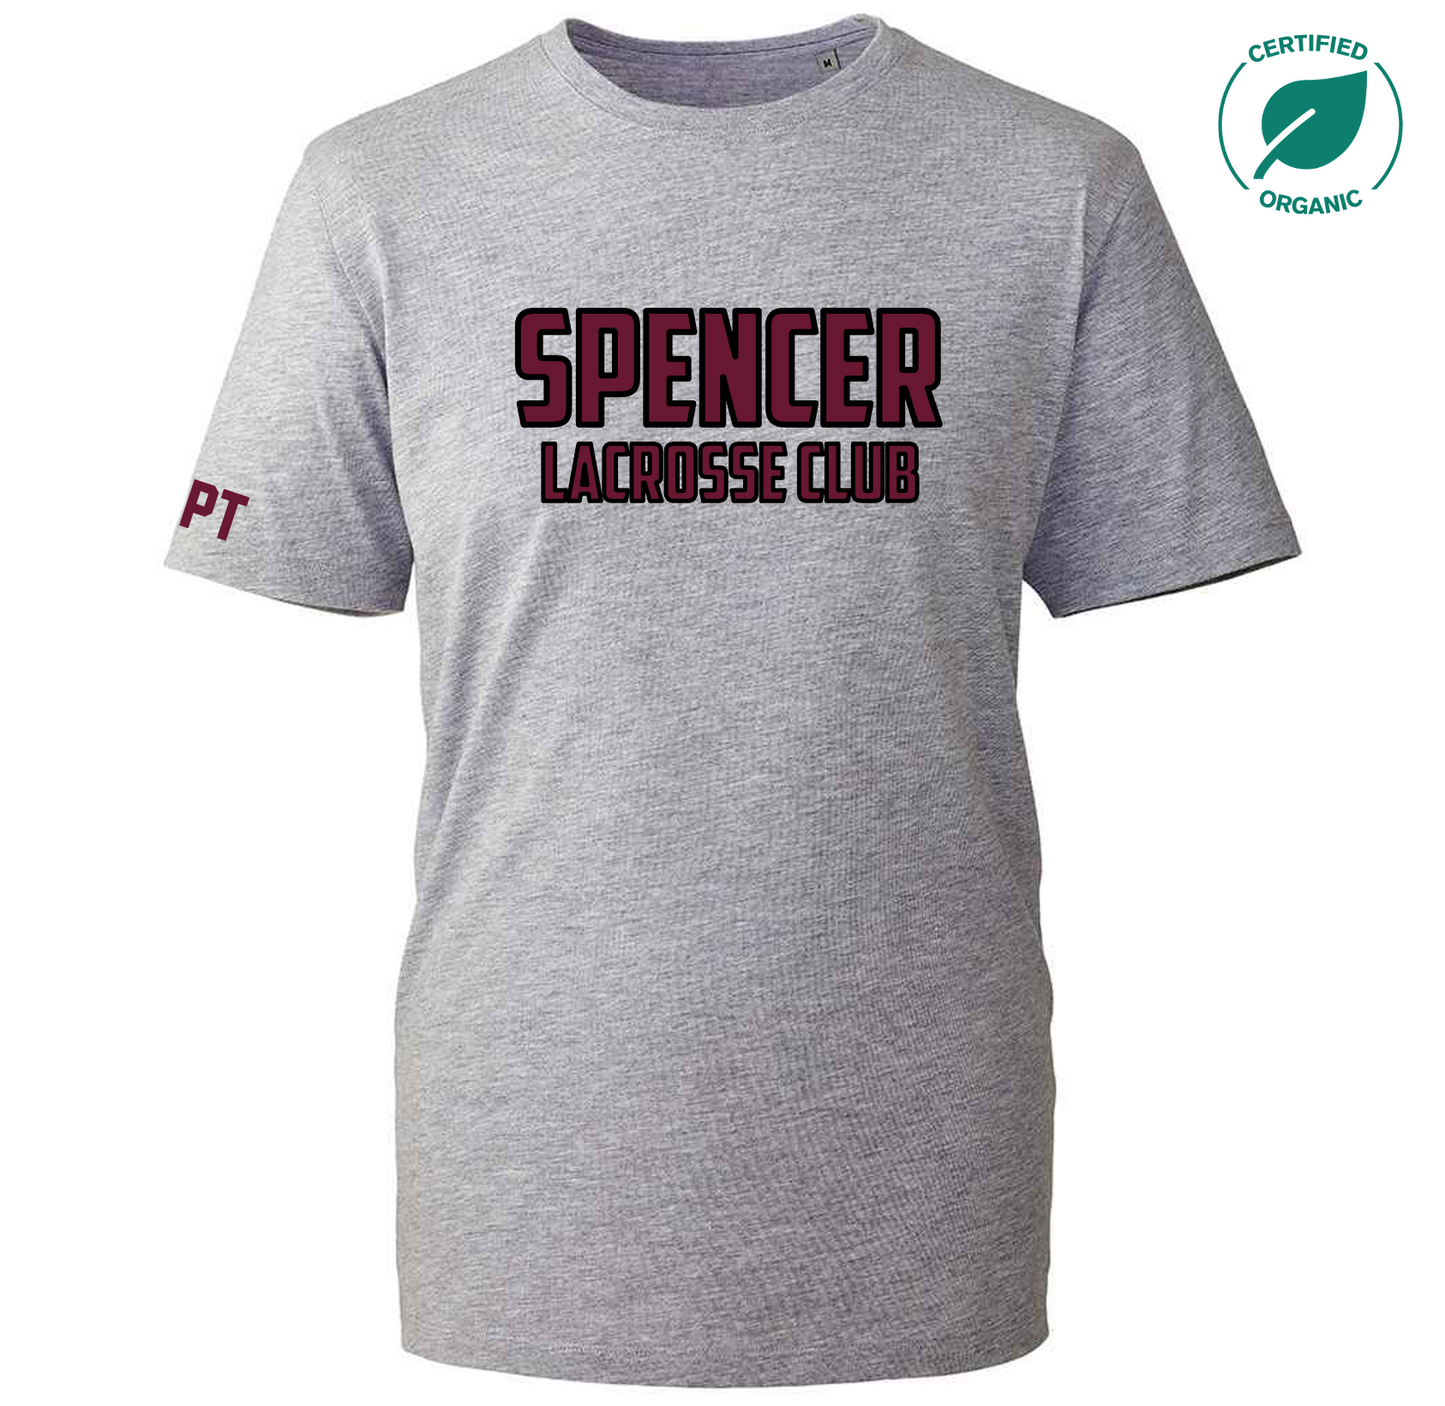 Spencer Organic Cotton T-Shirt